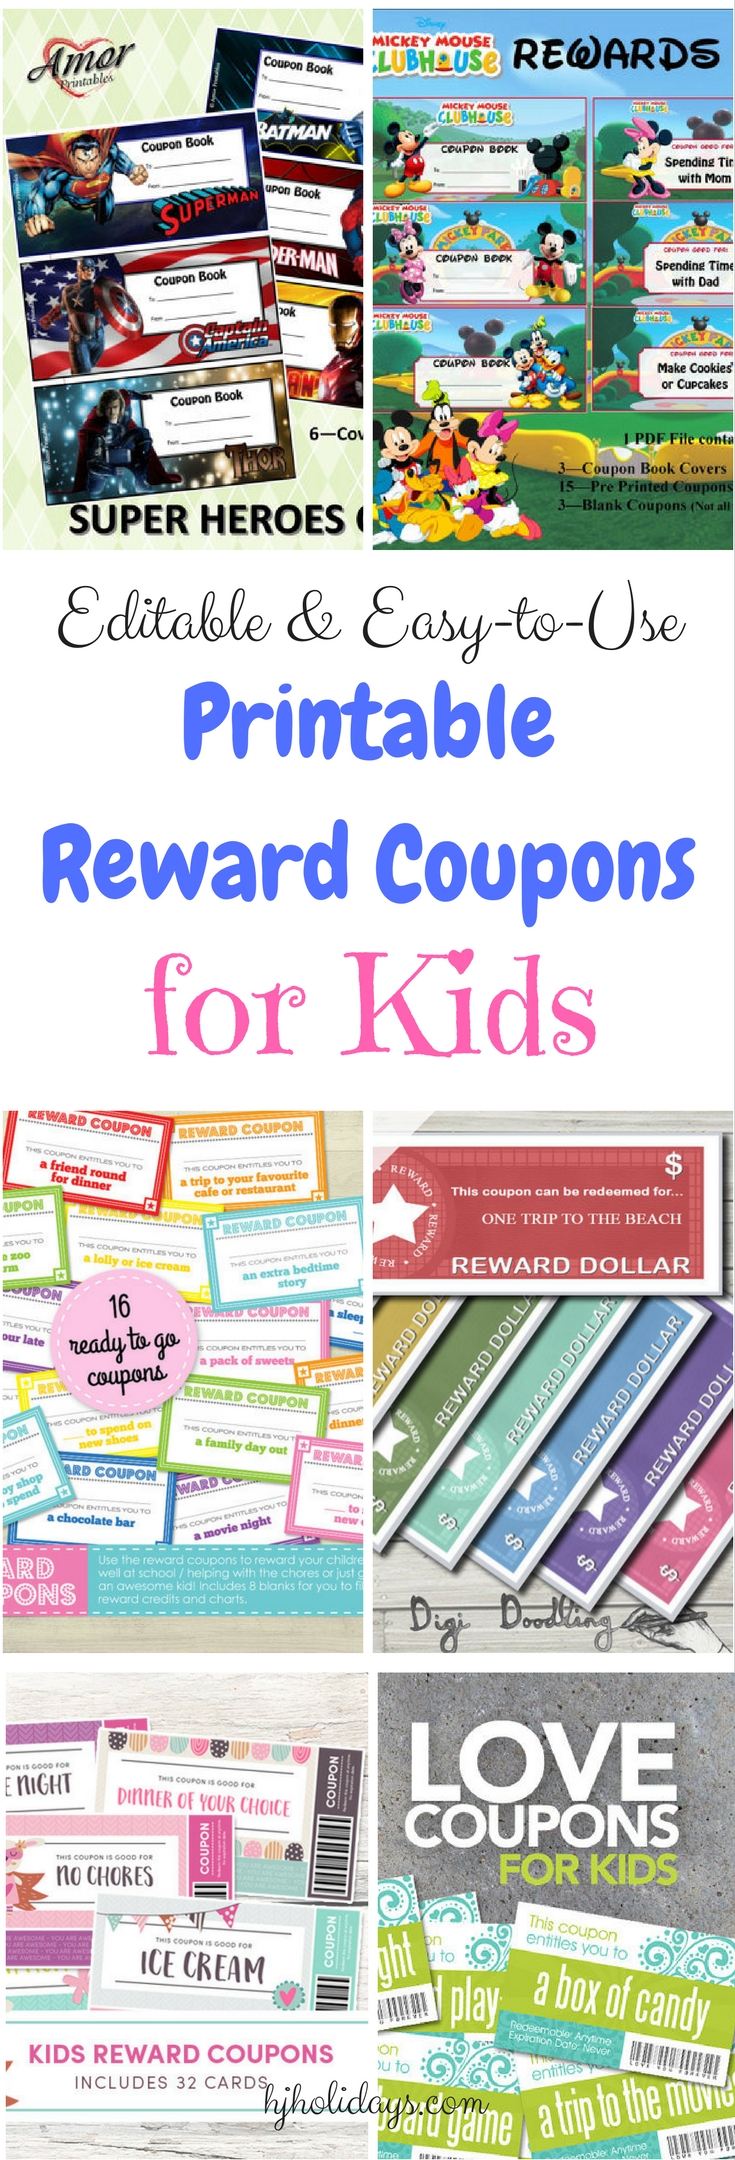 Editable and Easy-to-Use Printable Reward Coupons for Kids